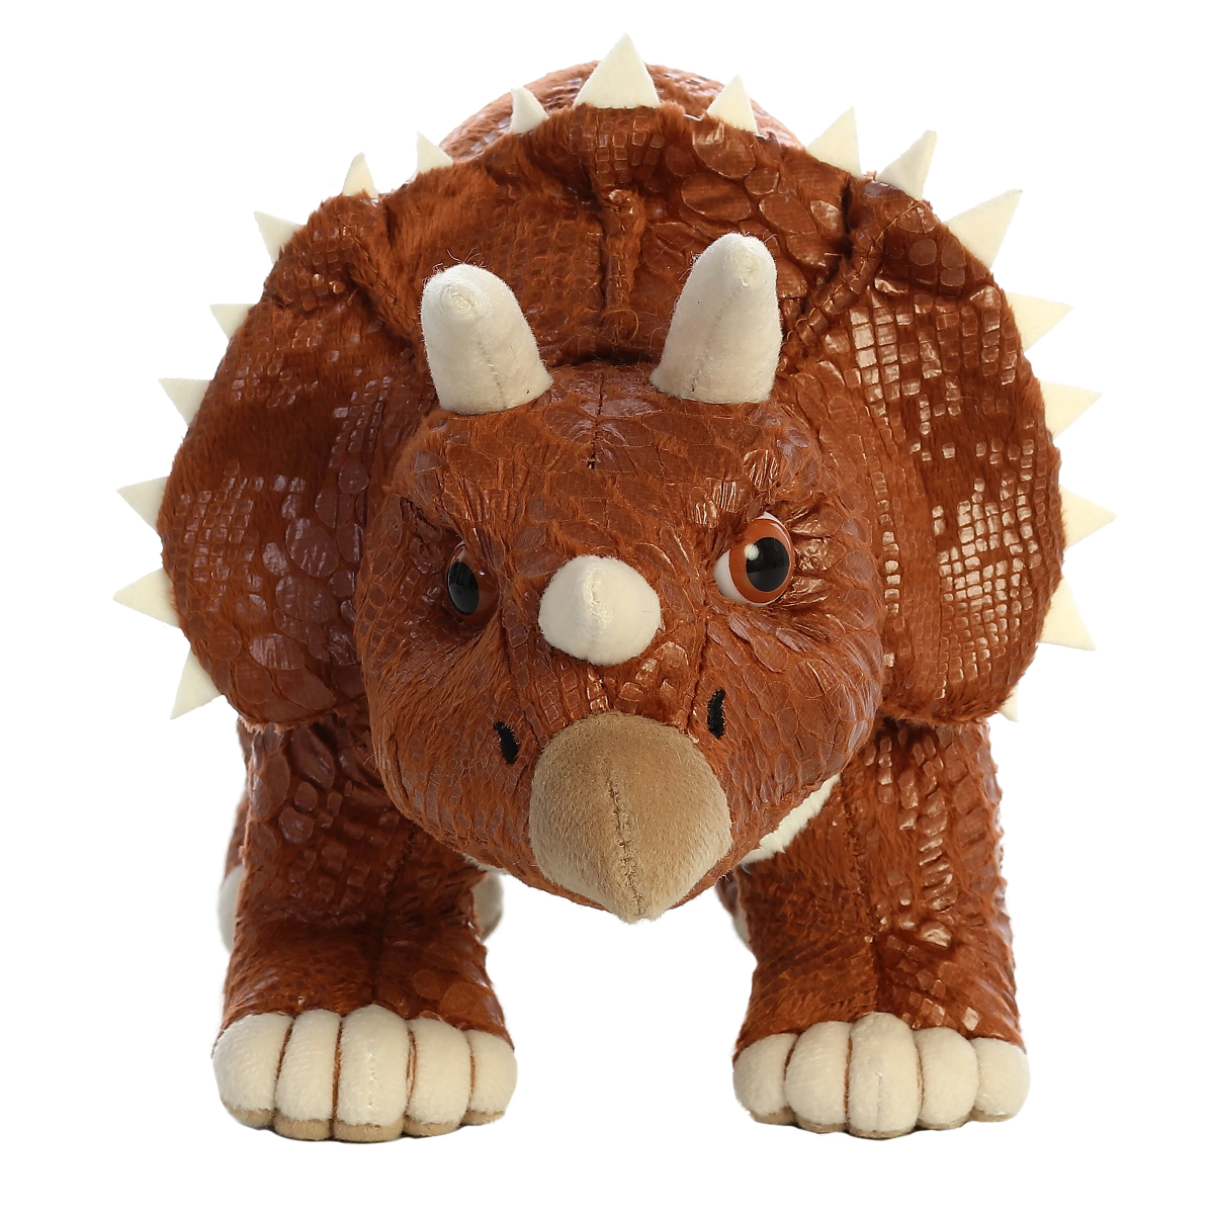 Little Softie the Plush Brown Teddy Bear by Aurora